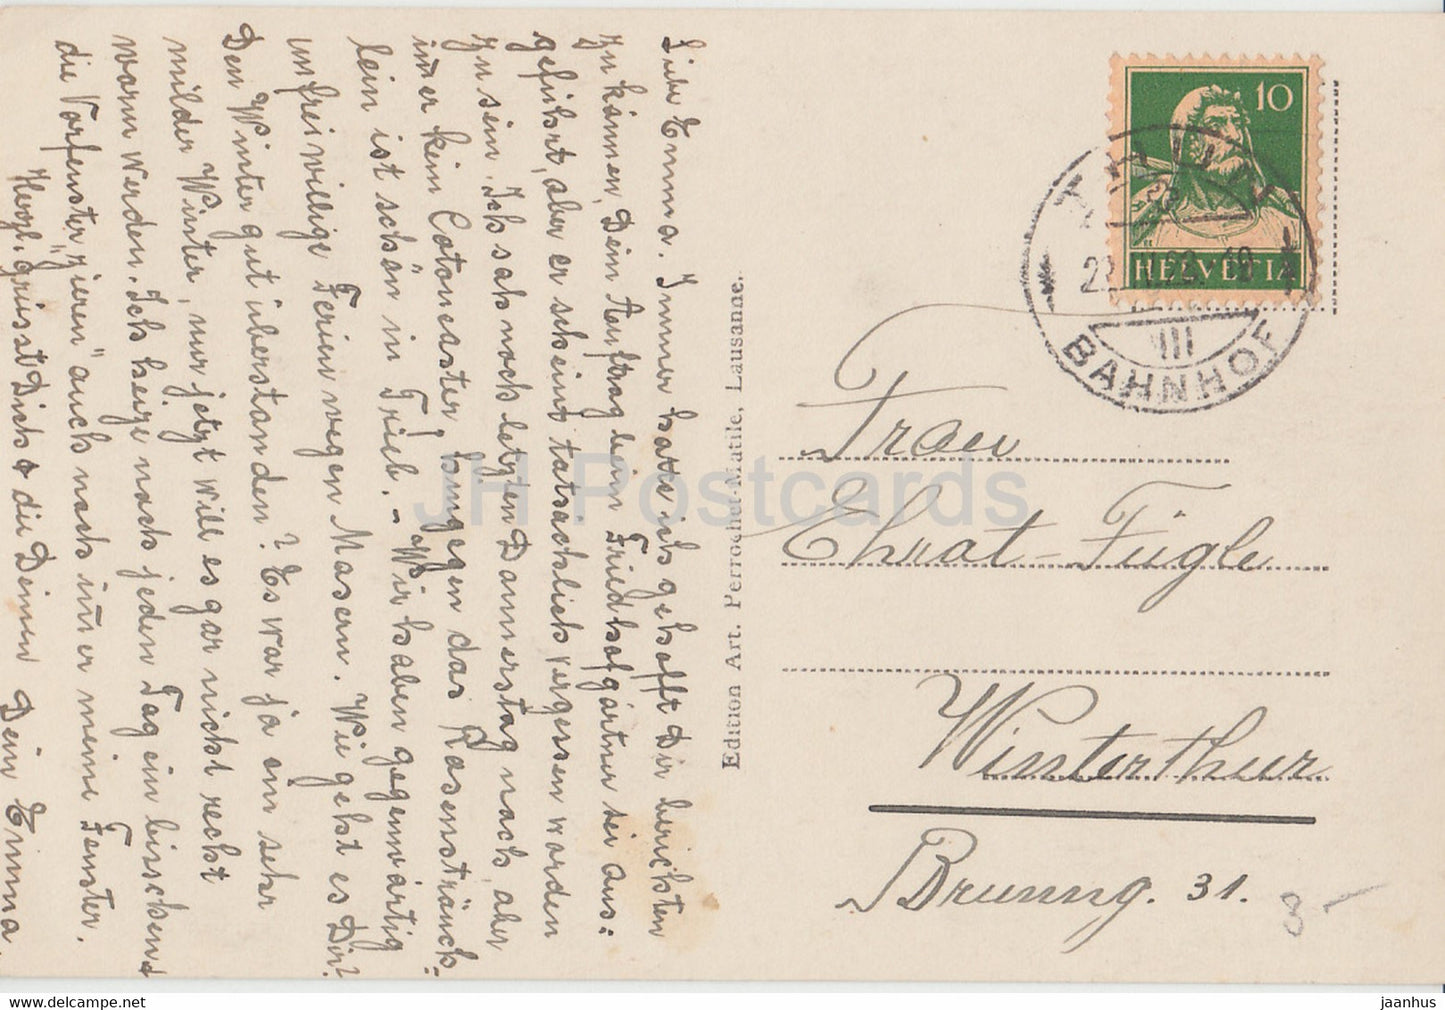 cygne - oiseaux - Perrochet 652 - carte postale ancienne - Suisse - 1928 - occasion